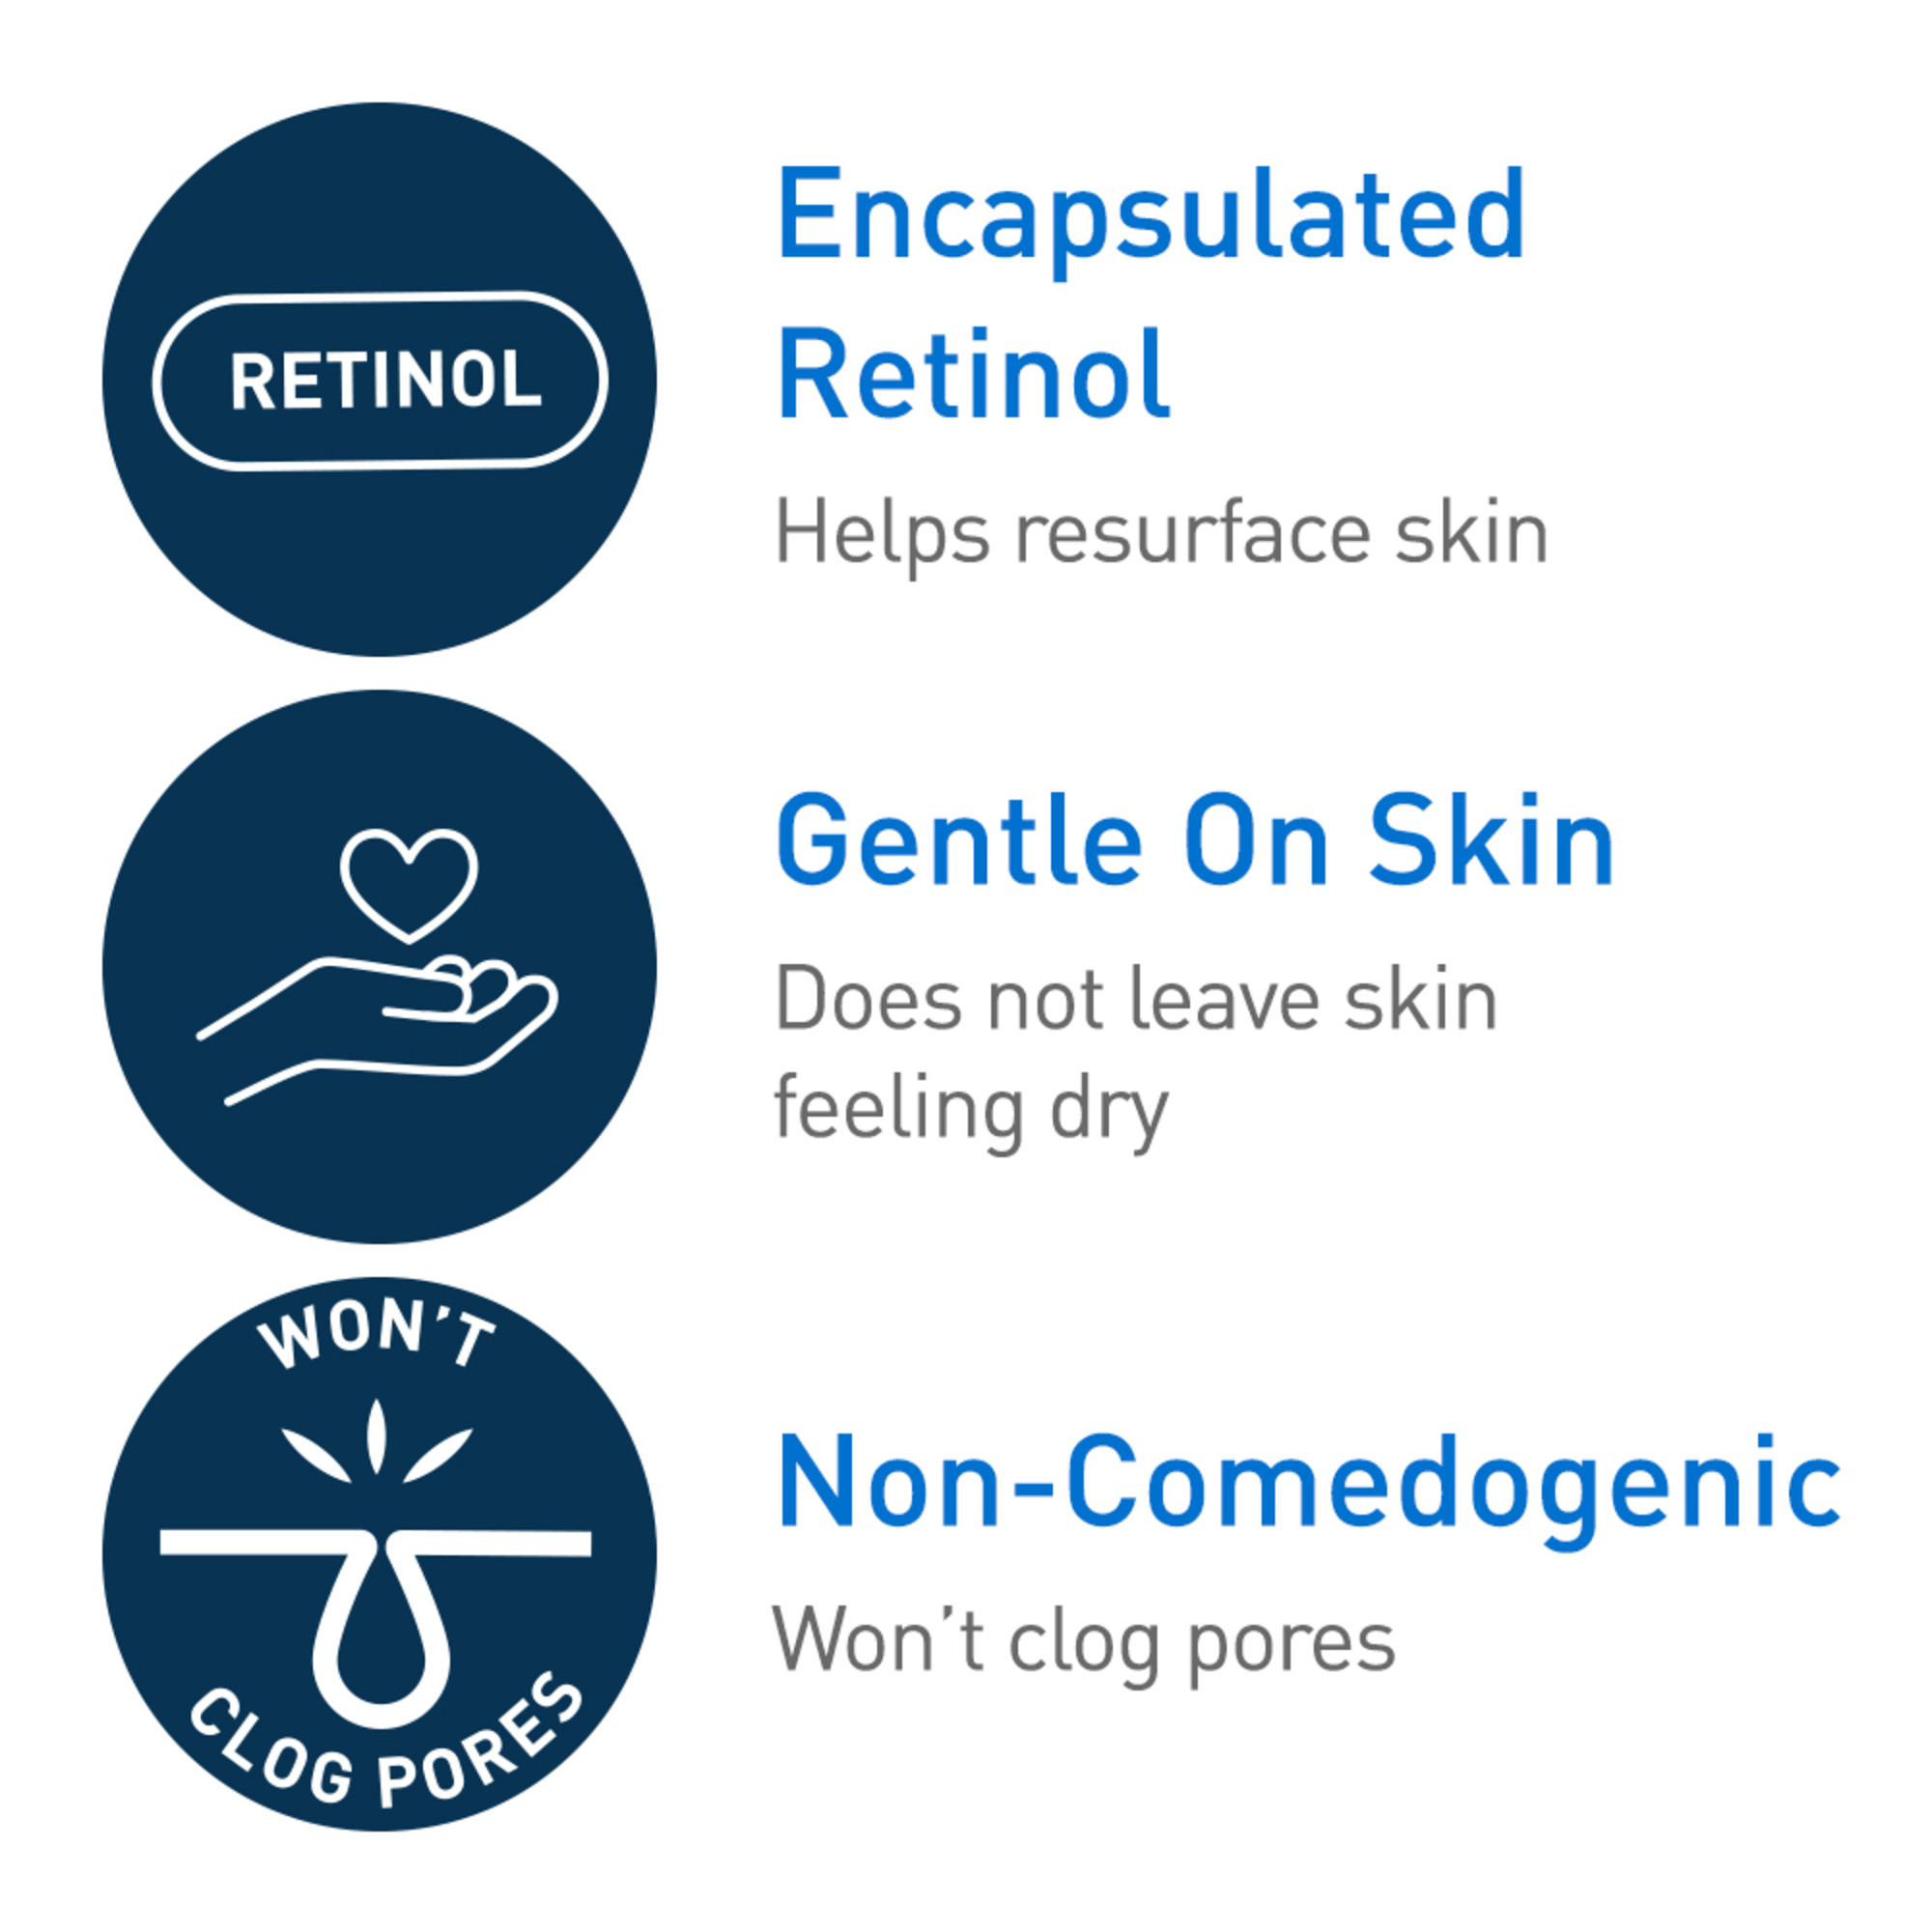 CeraVe Acne Resurfacing Retinol Face Serum with Retinol & Niacinamide for Acne Prone Skin, 1 fl oz - image 10 of 16